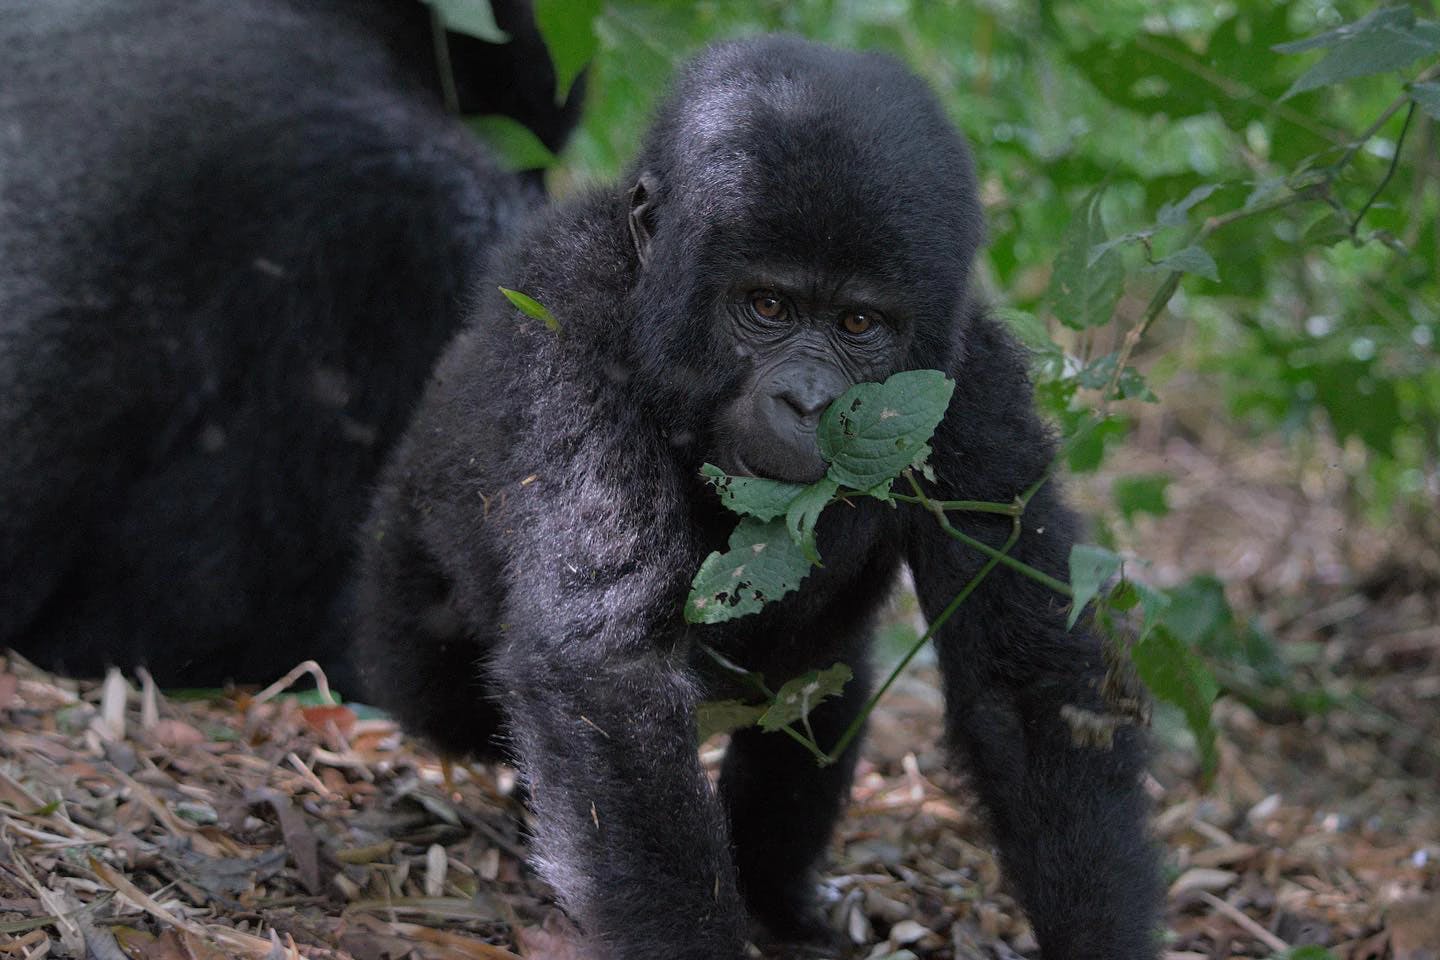 A baby gorilla plays in Uganda. Courtesy of Alyssa Rinelli